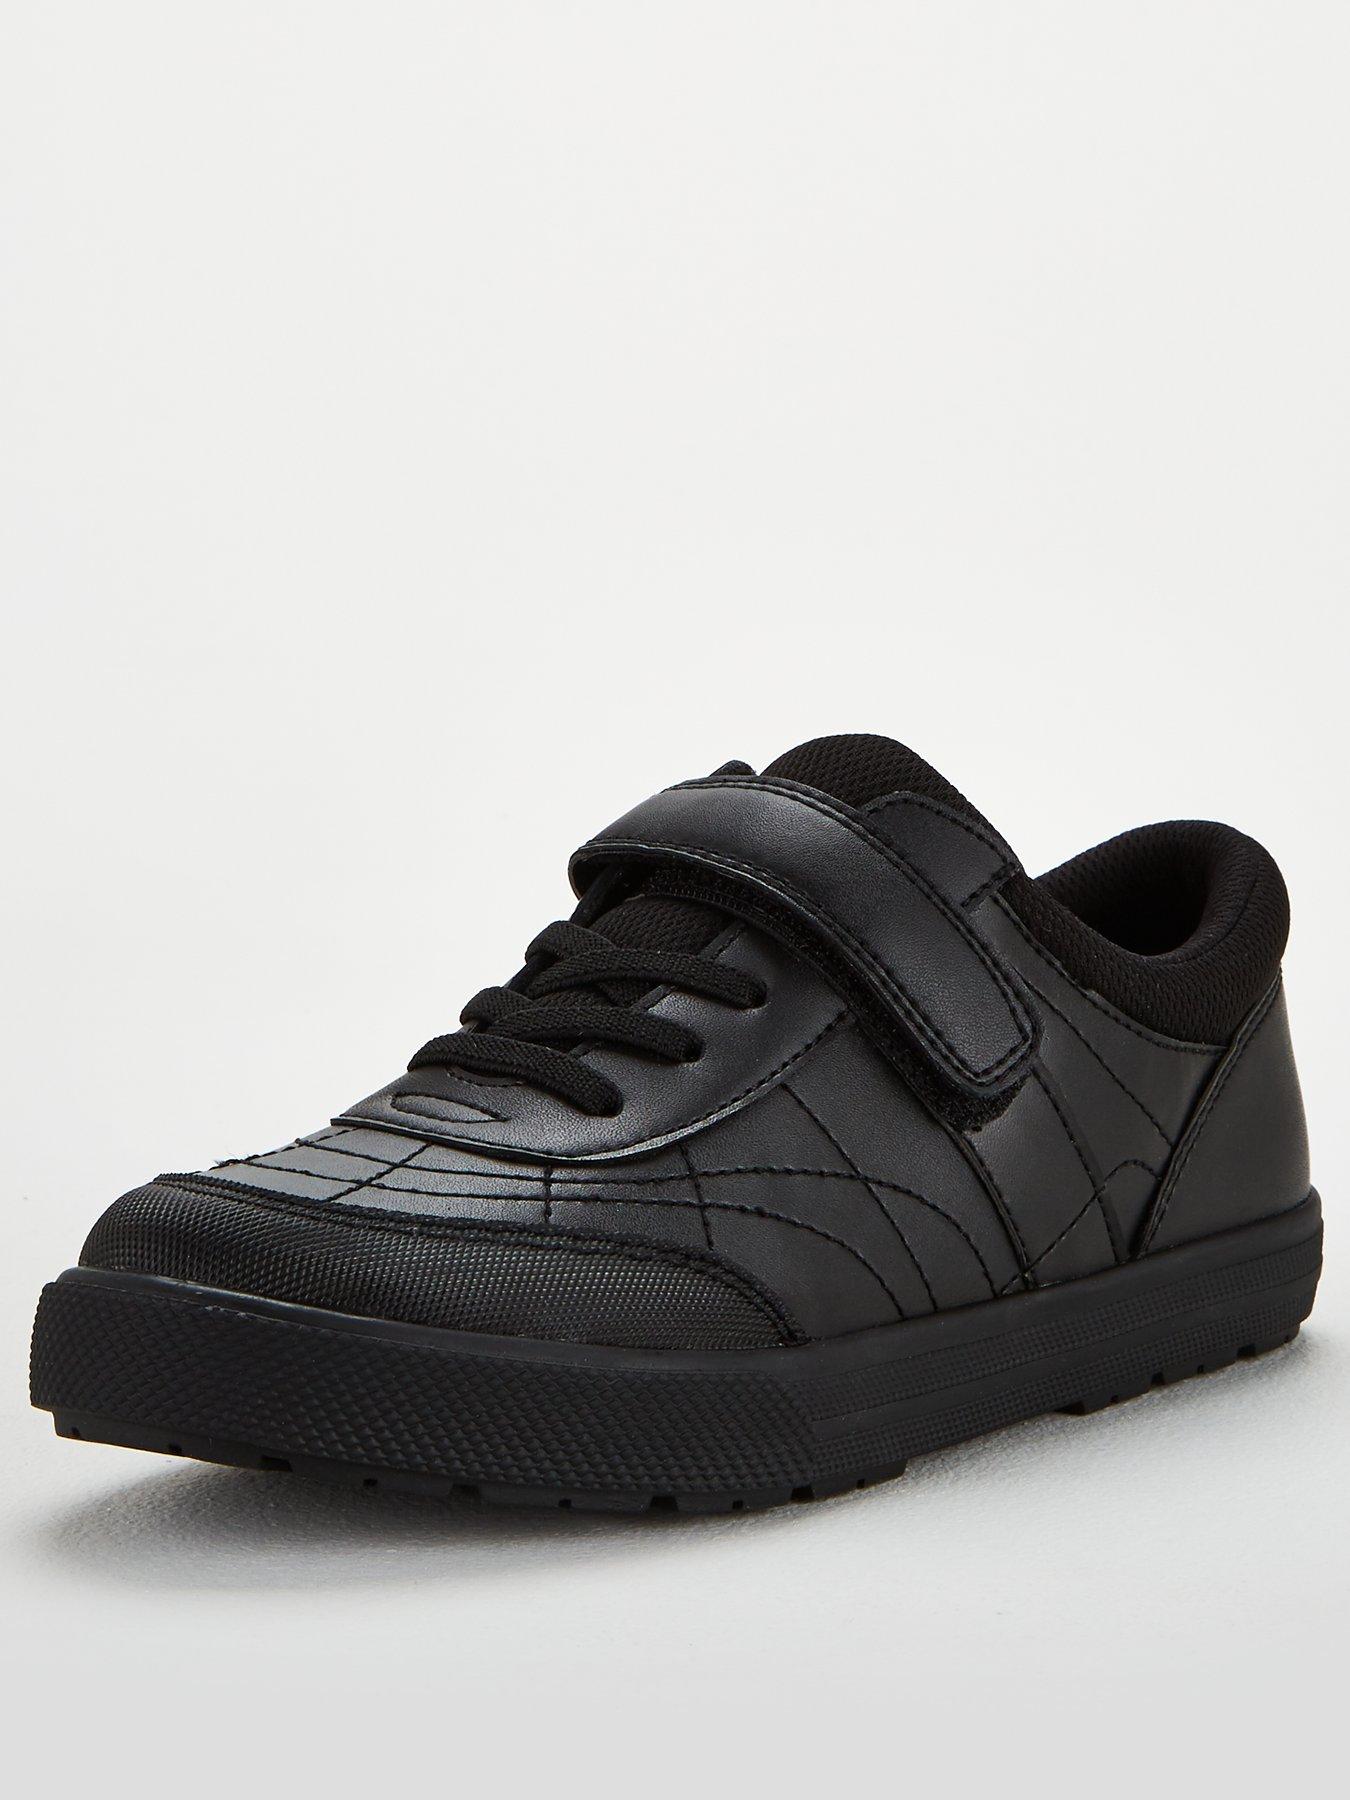  Boys Lace Leather Trainer School Shoe - Black